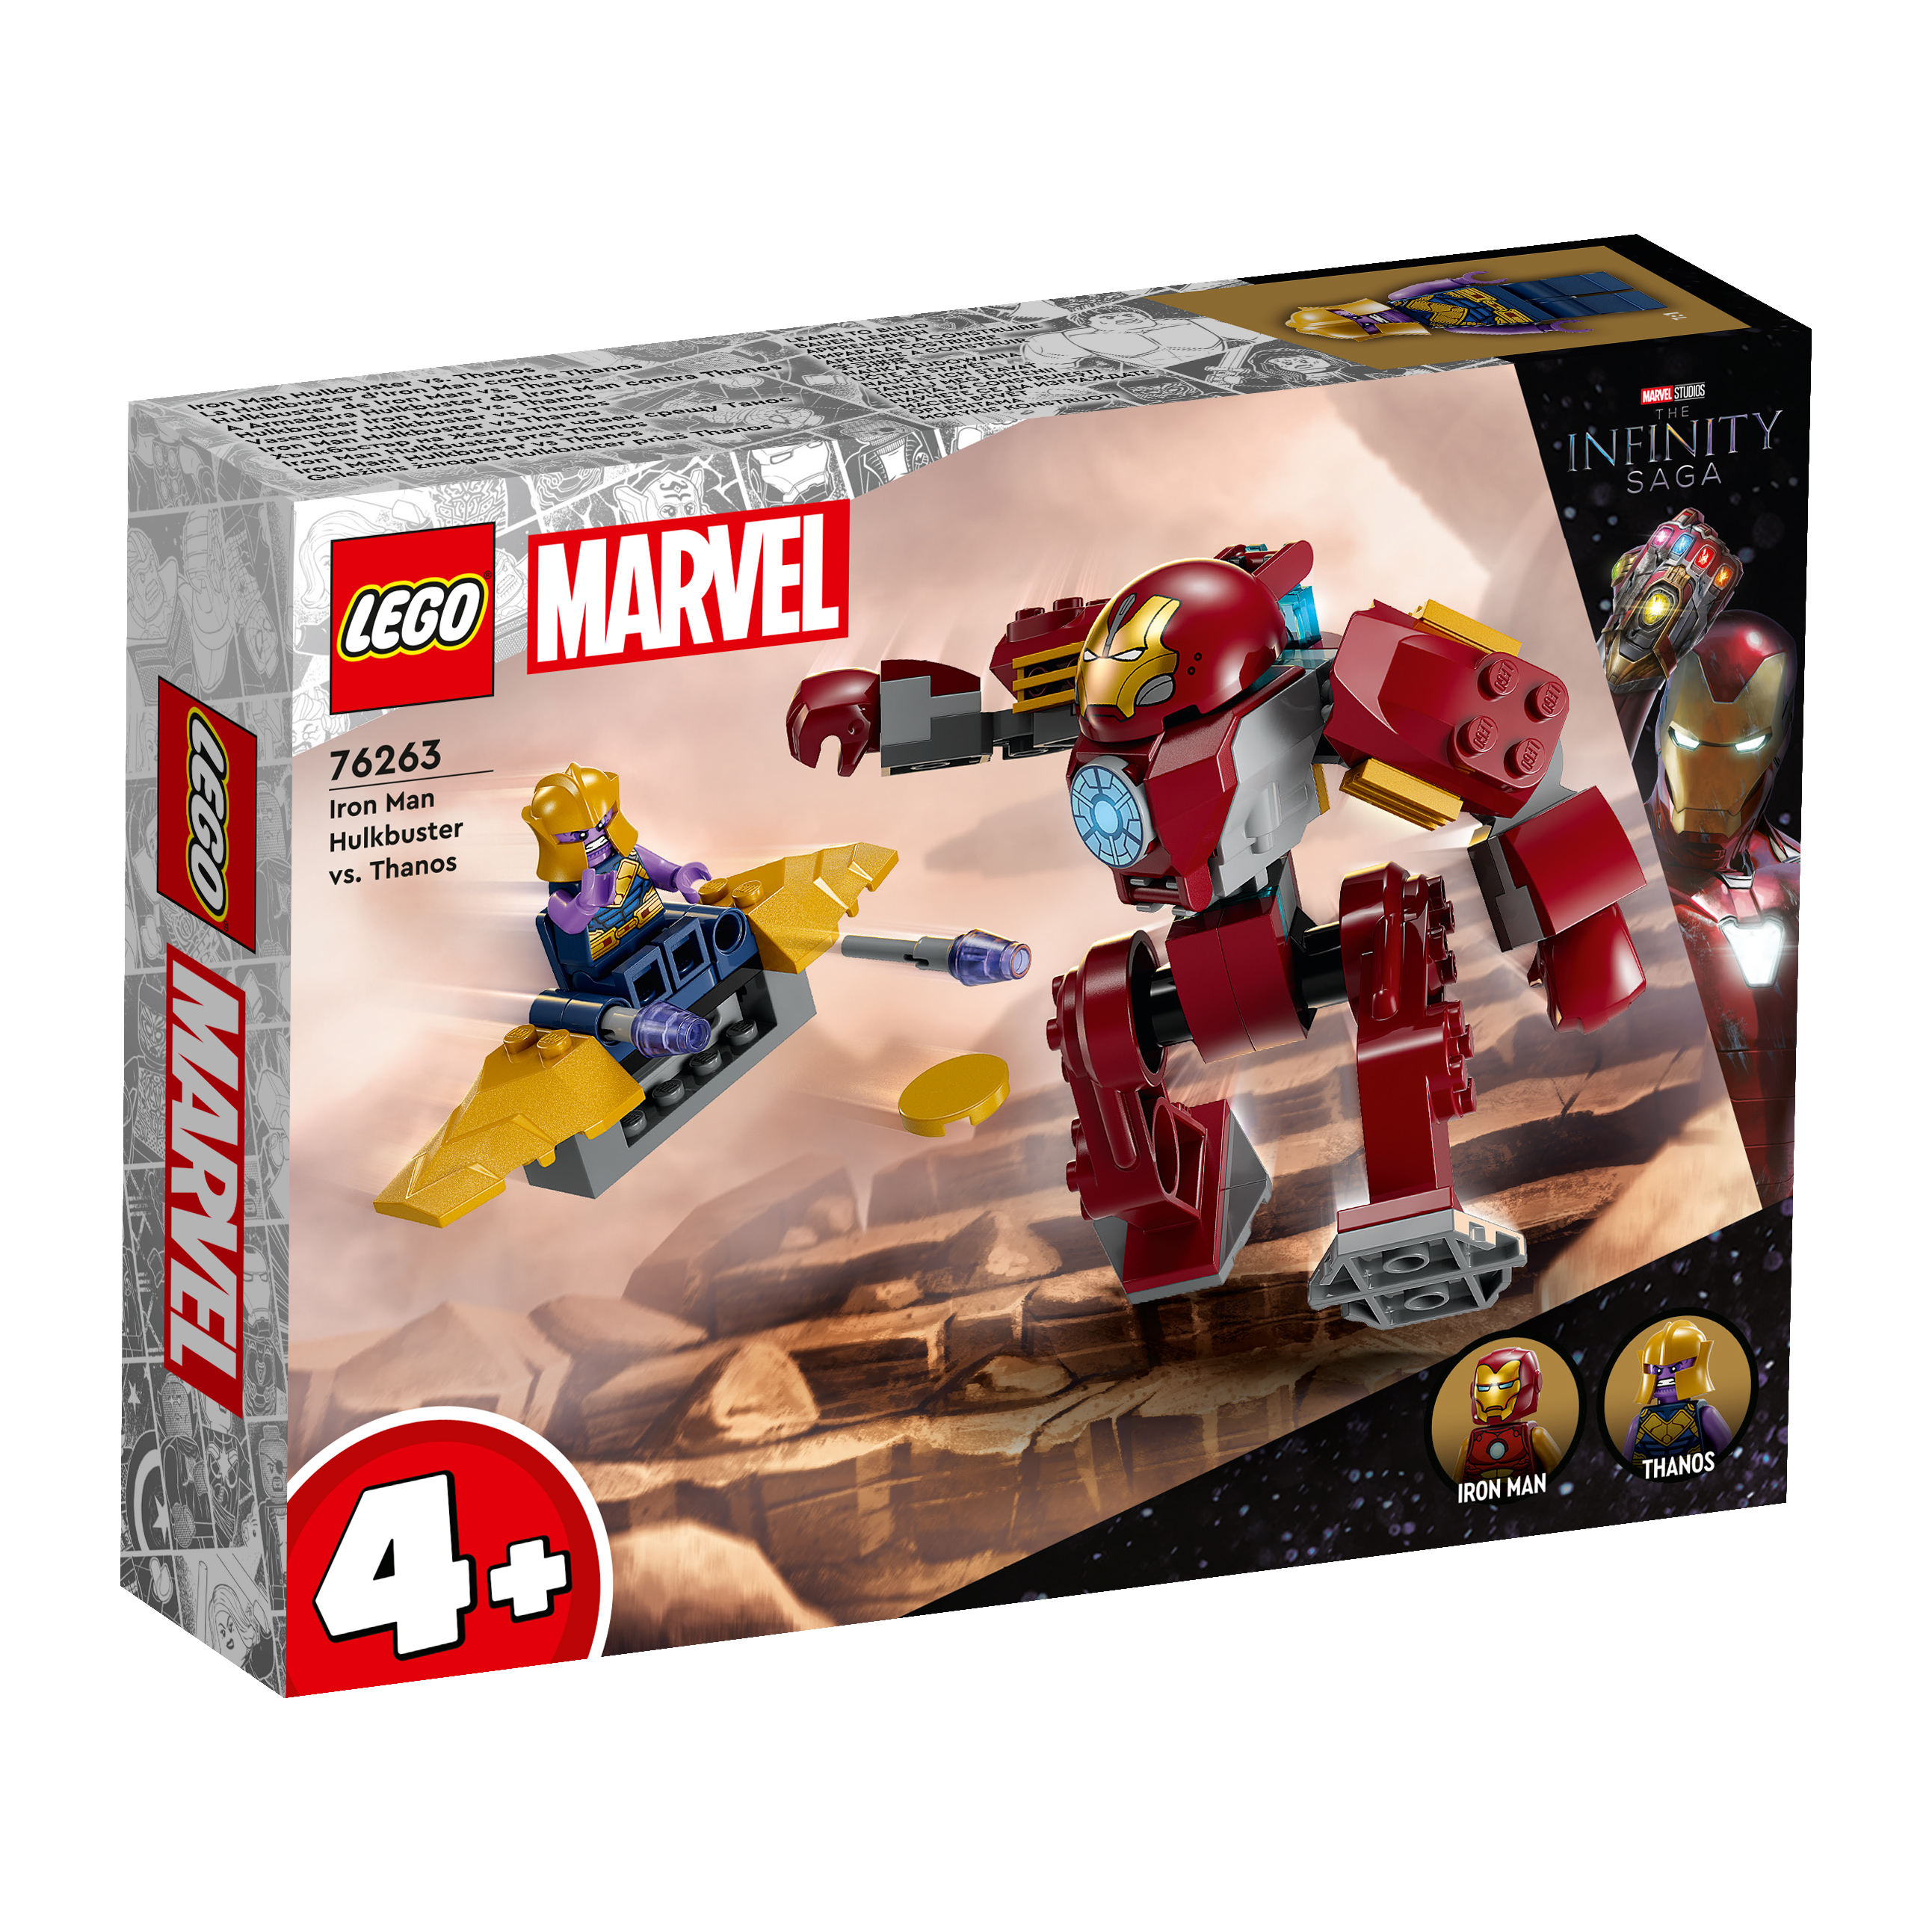 LEGO Marvel Avengers: Code Red filme - assistir